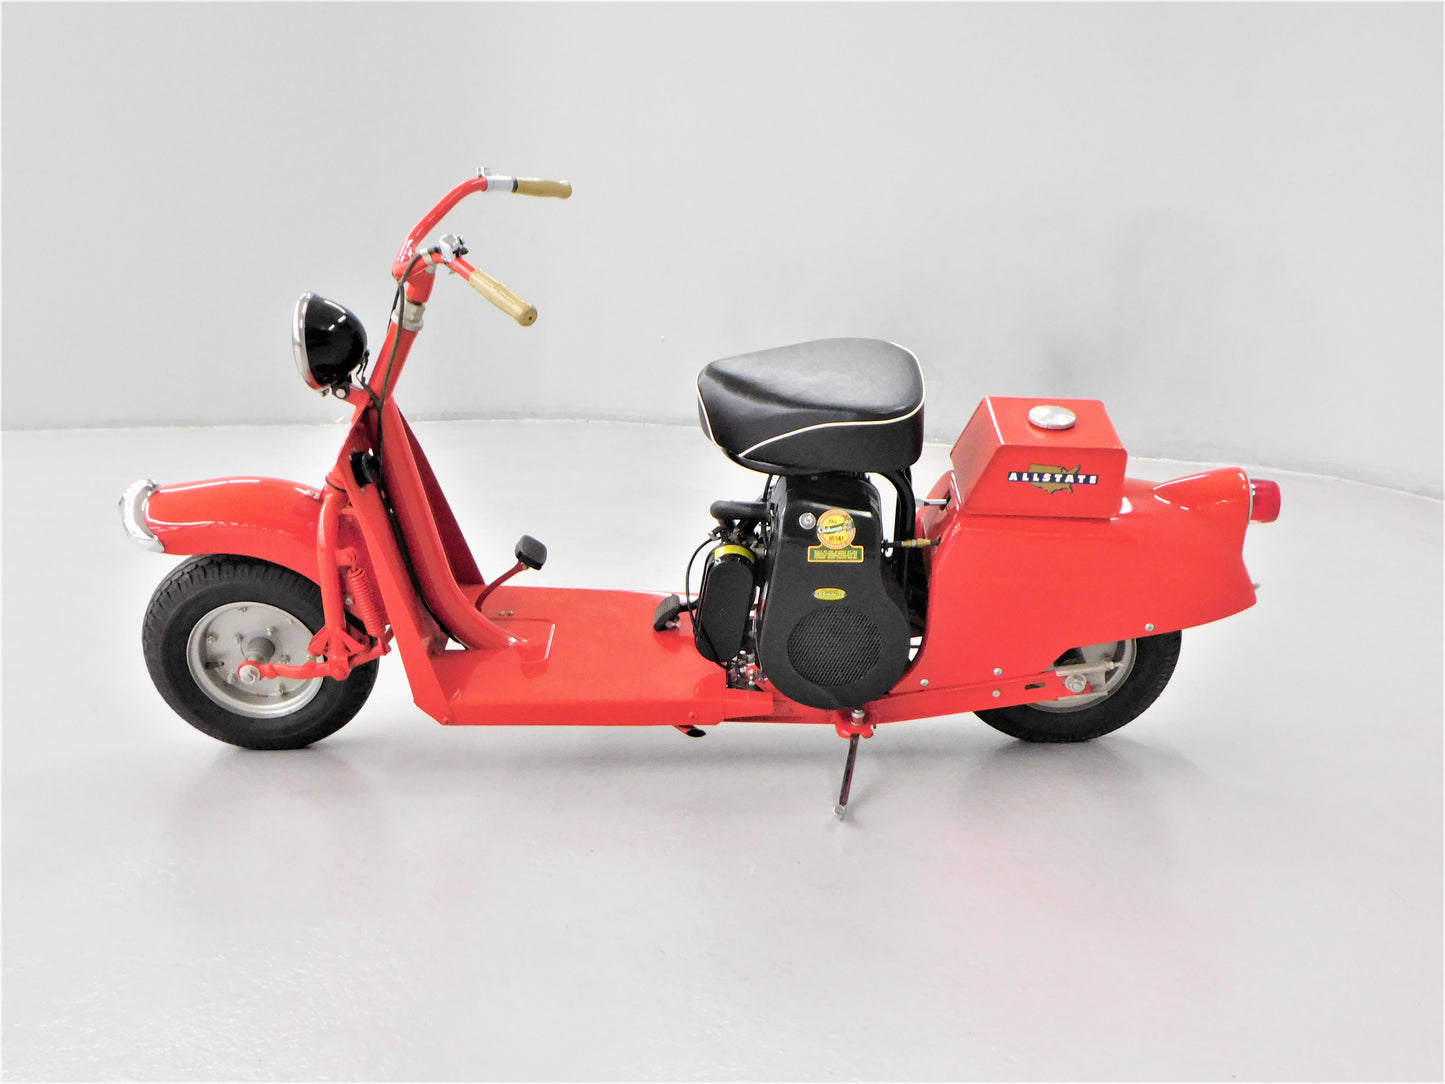 1959 Allstate Scooter Model 811.94350